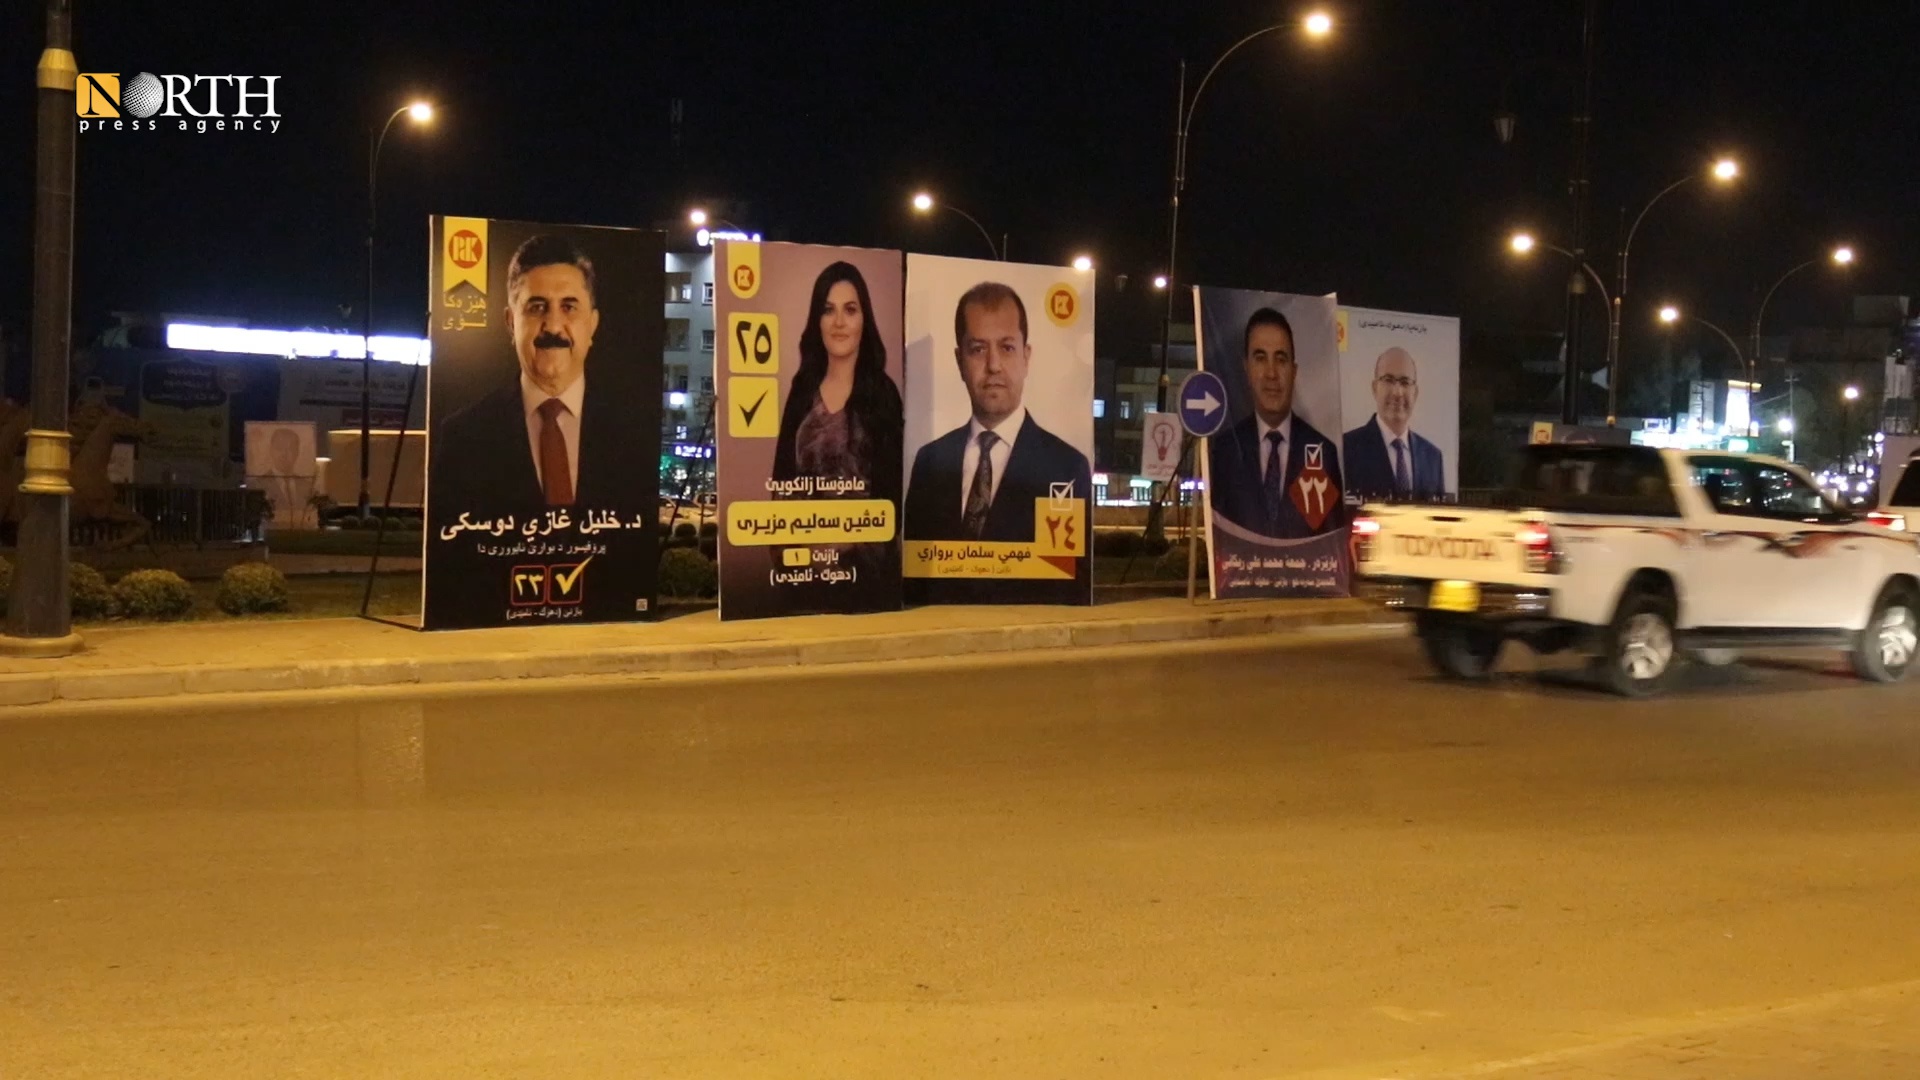 Low turnout in Iraq parliament elections in Kurdistan Region